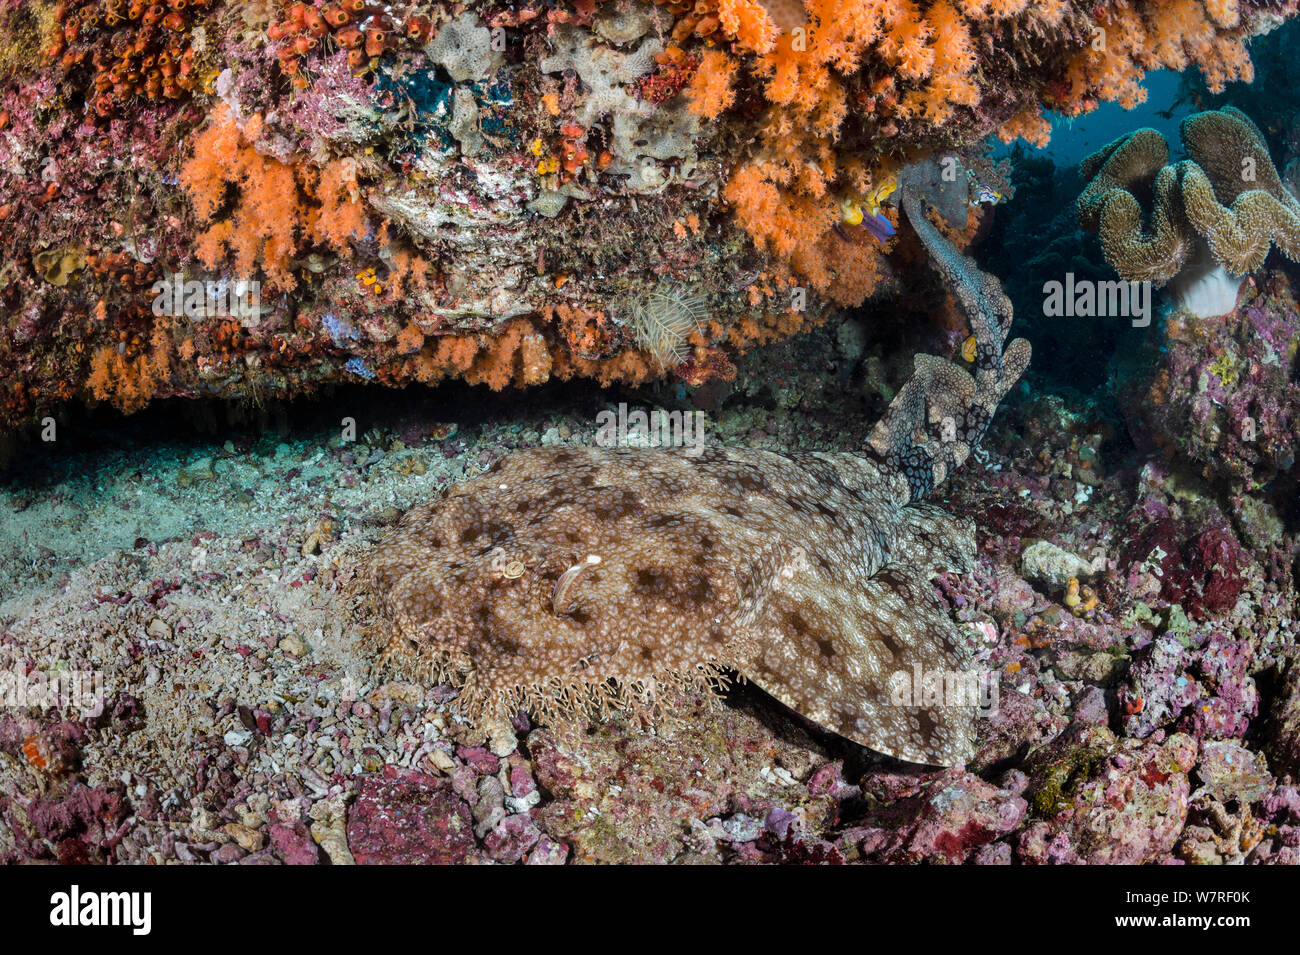 Tassled wobbegong shark (Eucrossorhinus dasypogon) resting under Coral head, covered in orange soft corals. Dampier Strait, Raja Ampat, West Papua, Indonesia. Tropical West Pacific Ocean Stock Photo